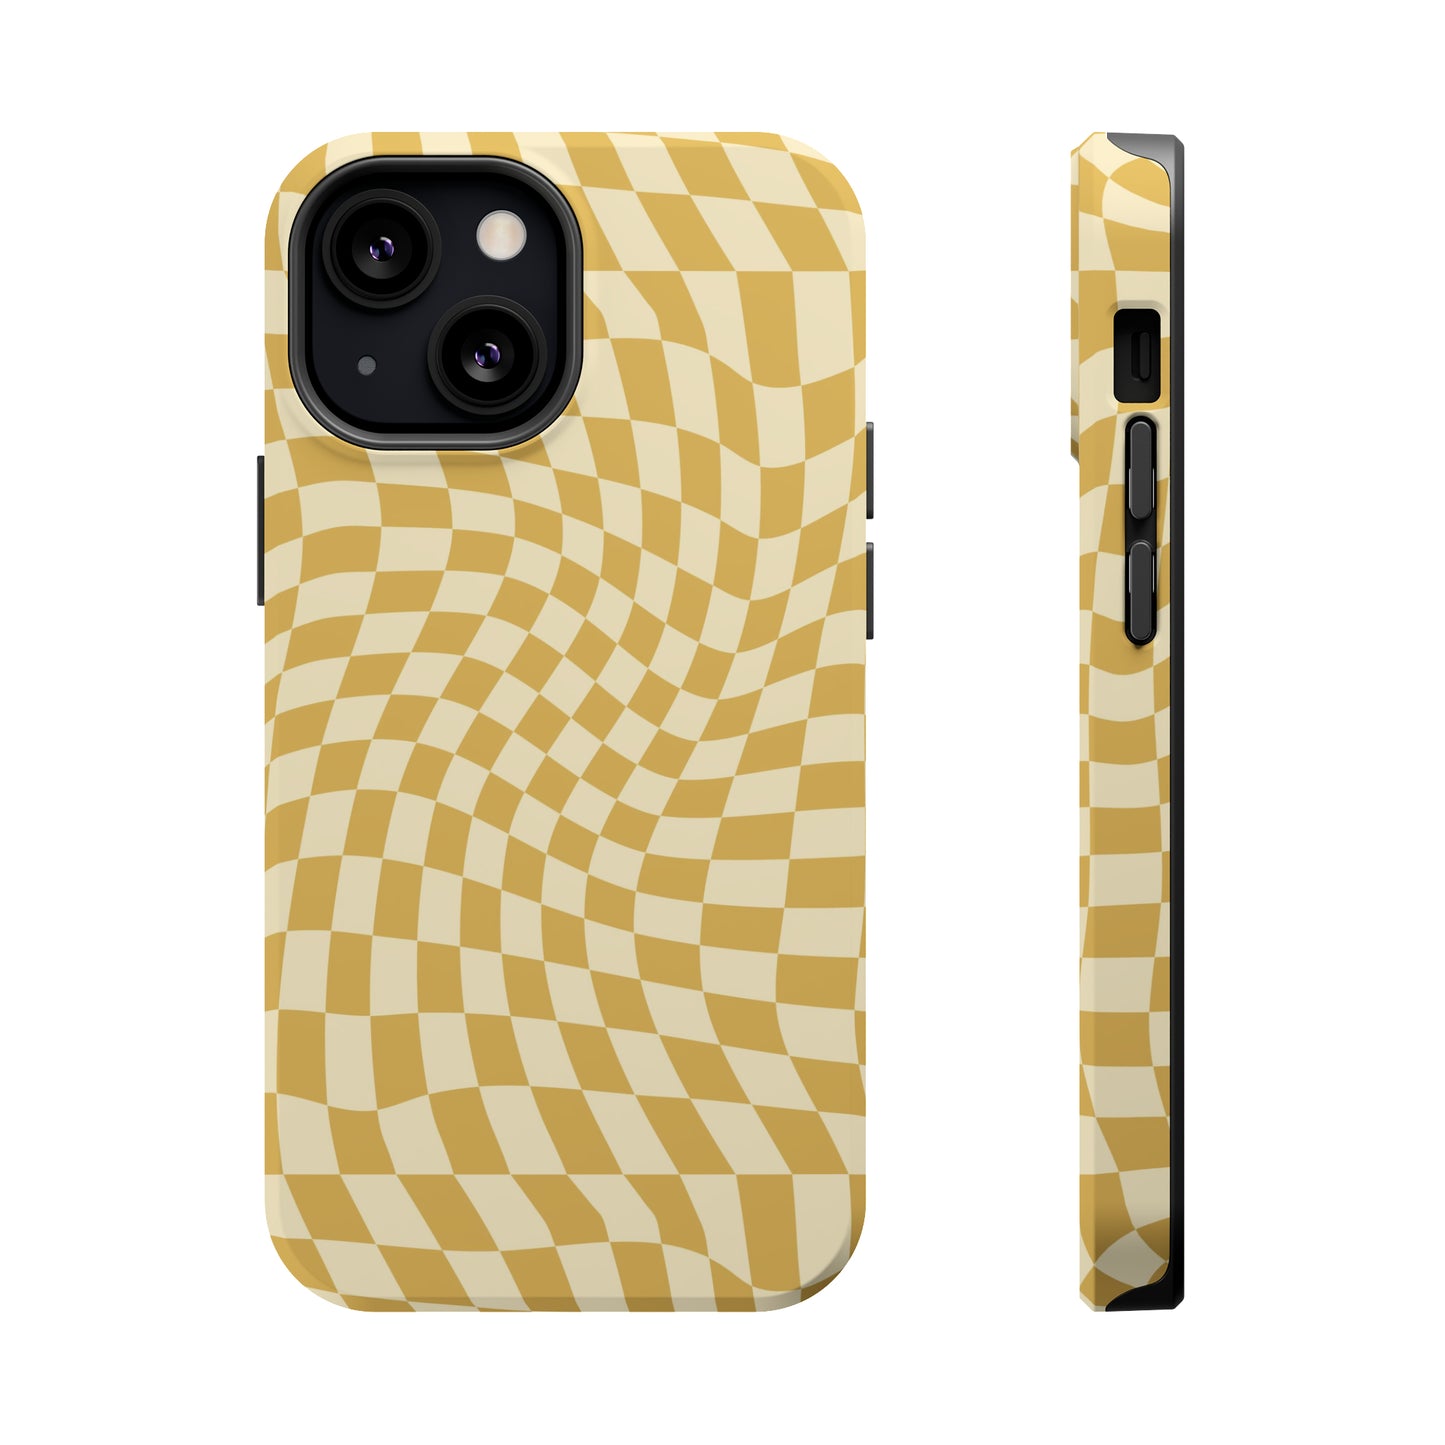 Wavy Yellow Checkerboard Case